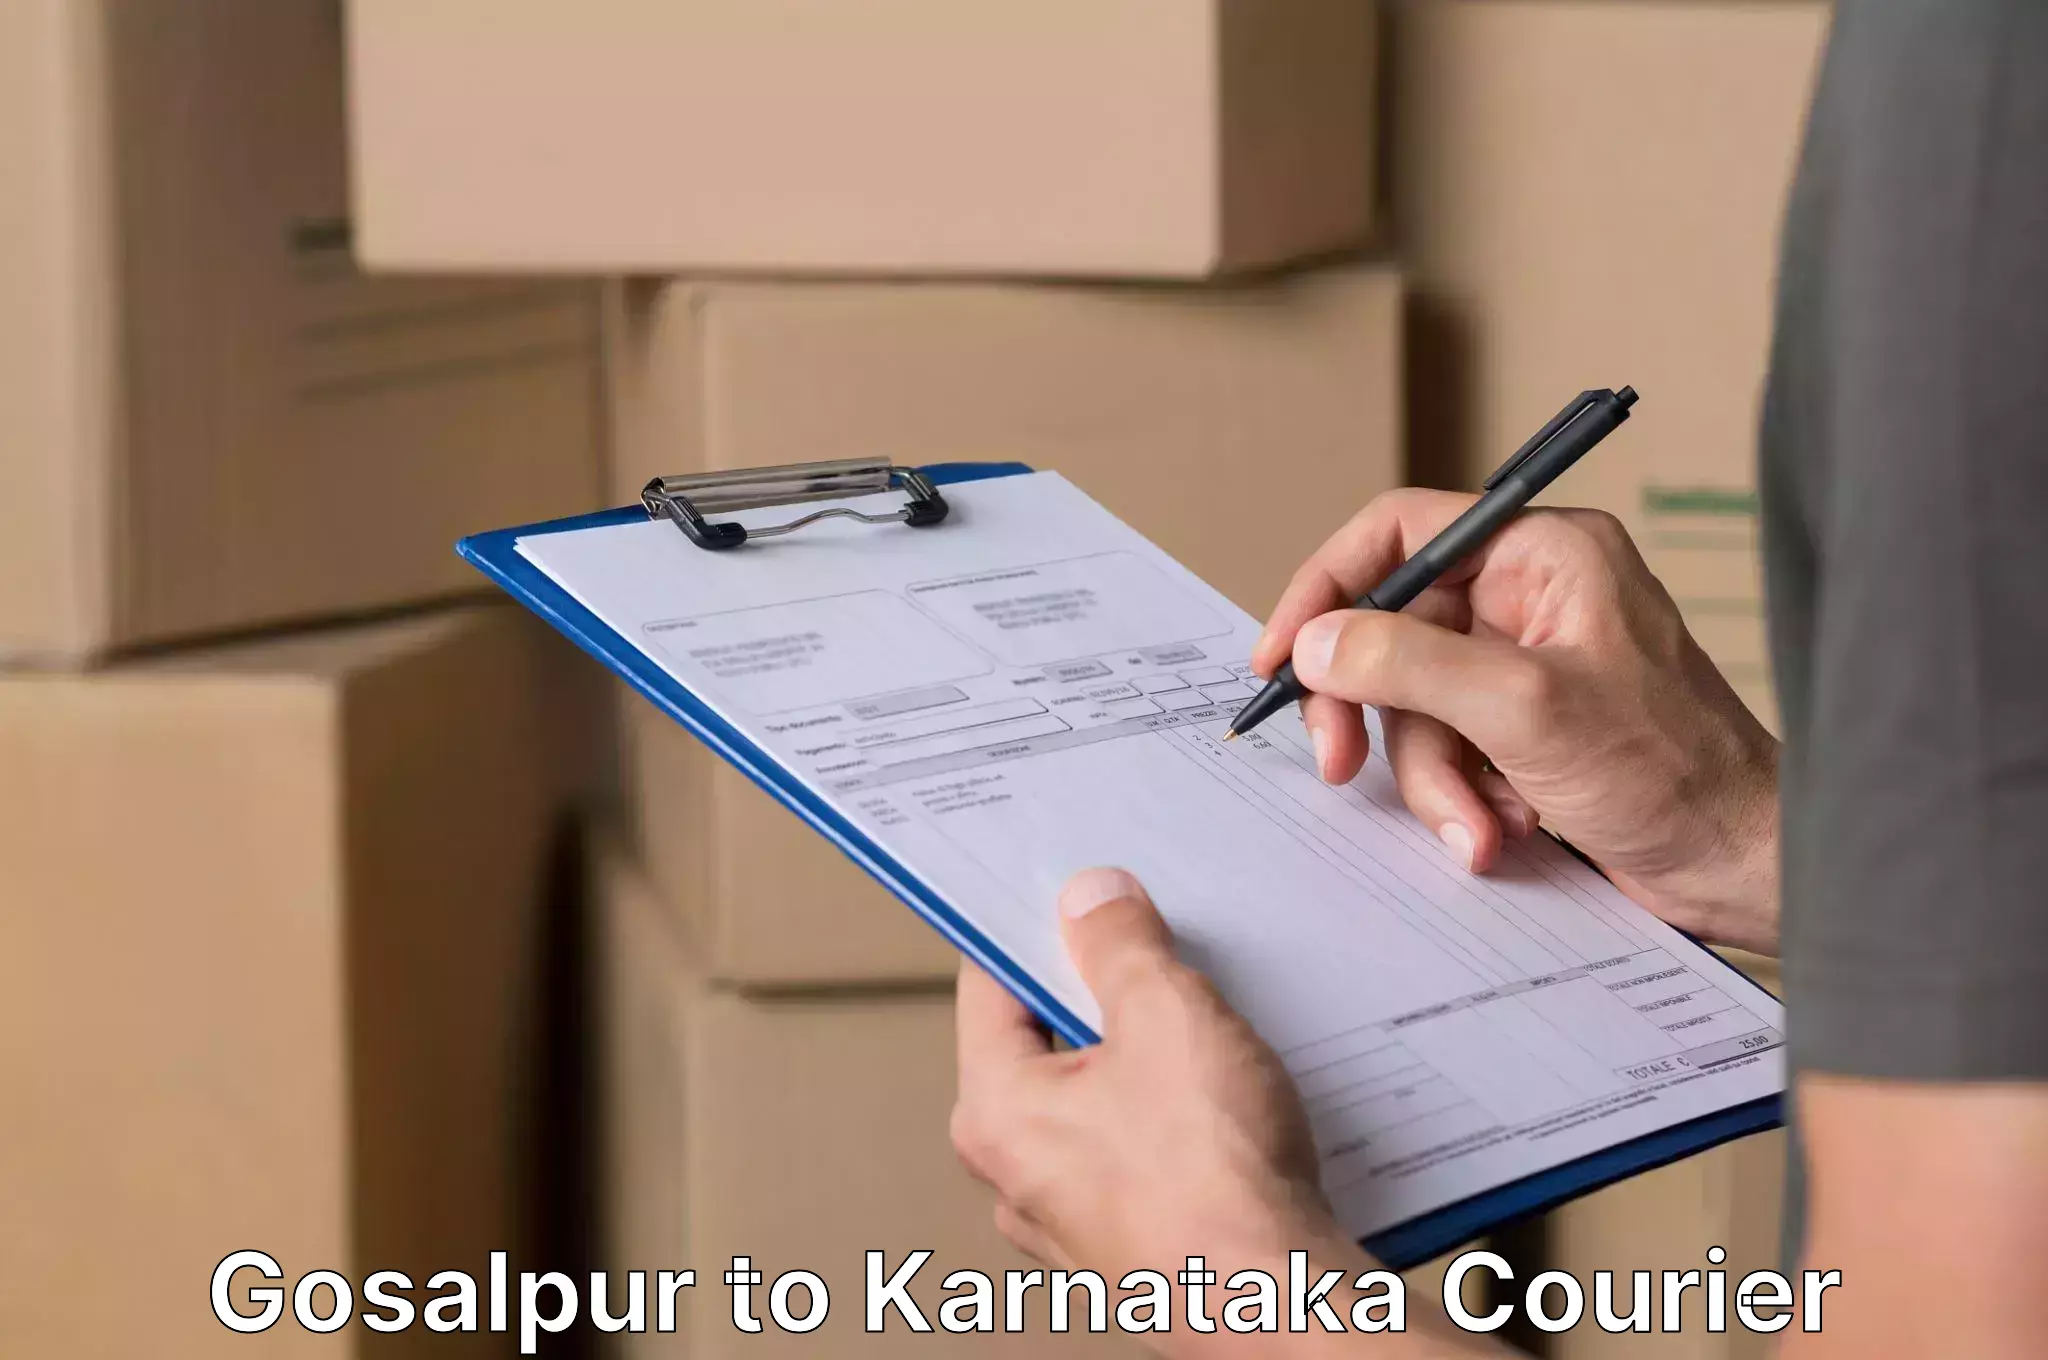 Furniture transport company Gosalpur to Karnataka